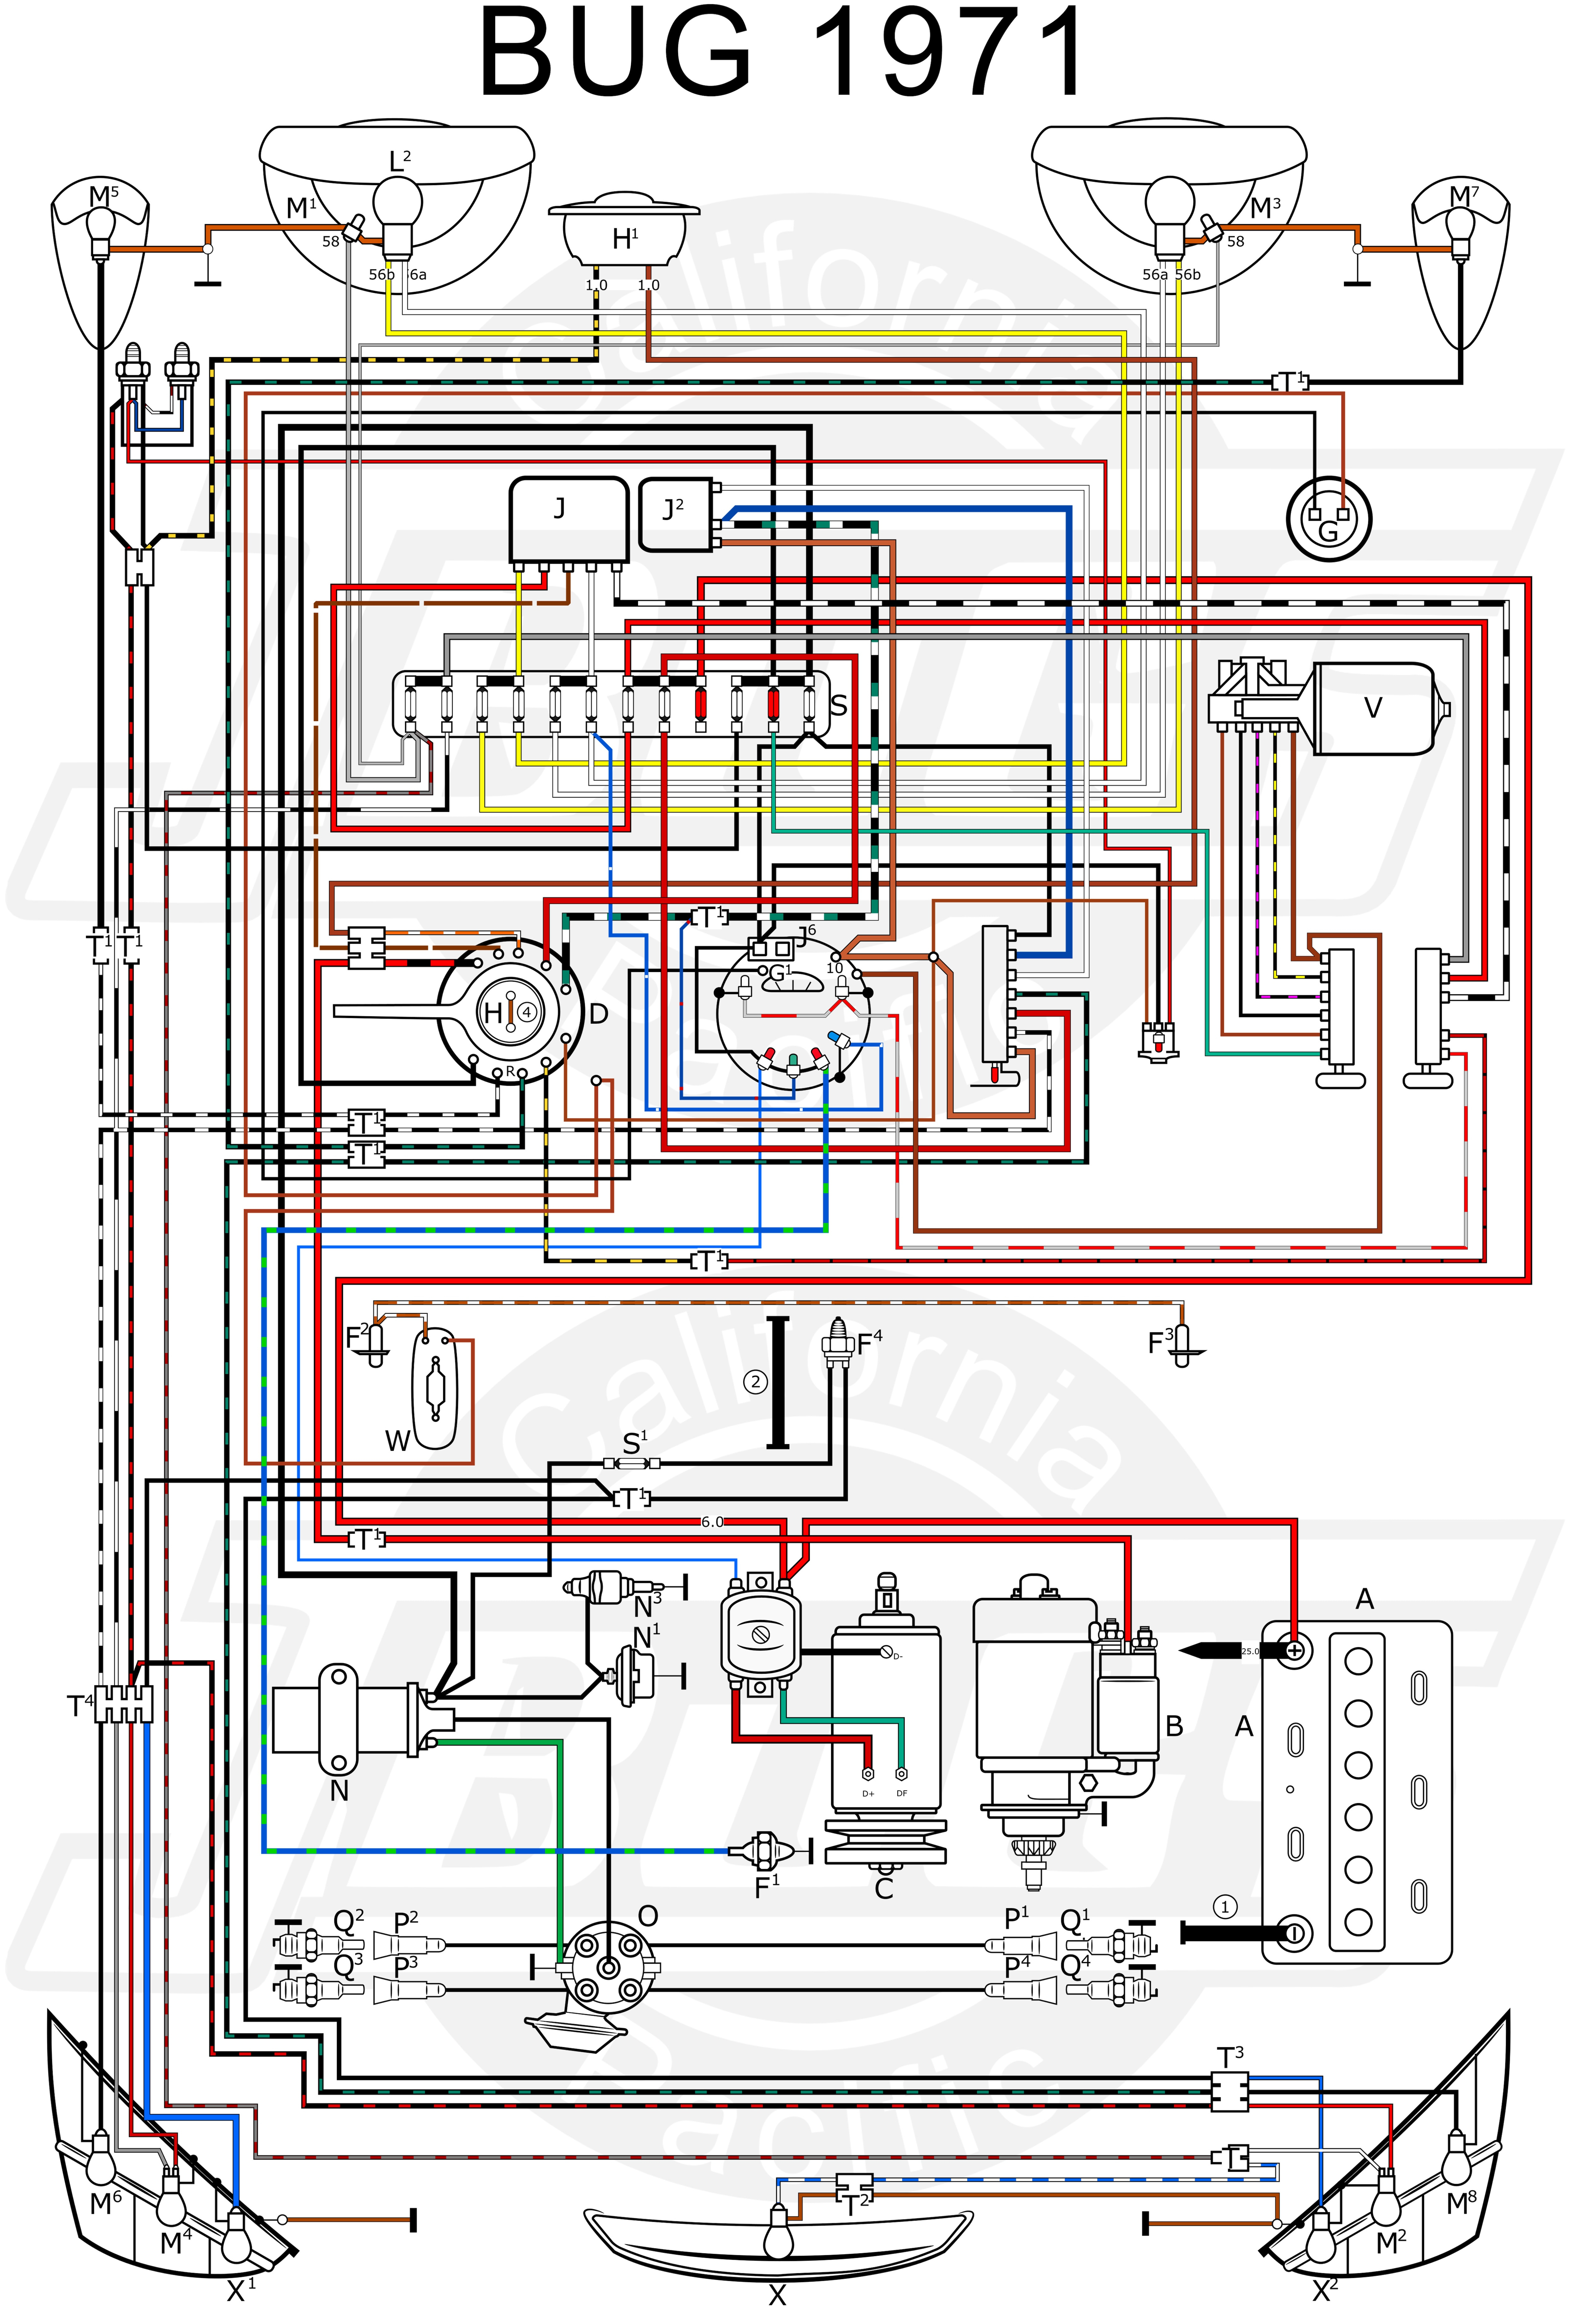 Vw Tech Article 1971 Wiring Diagram - Vw Wiring Diagram